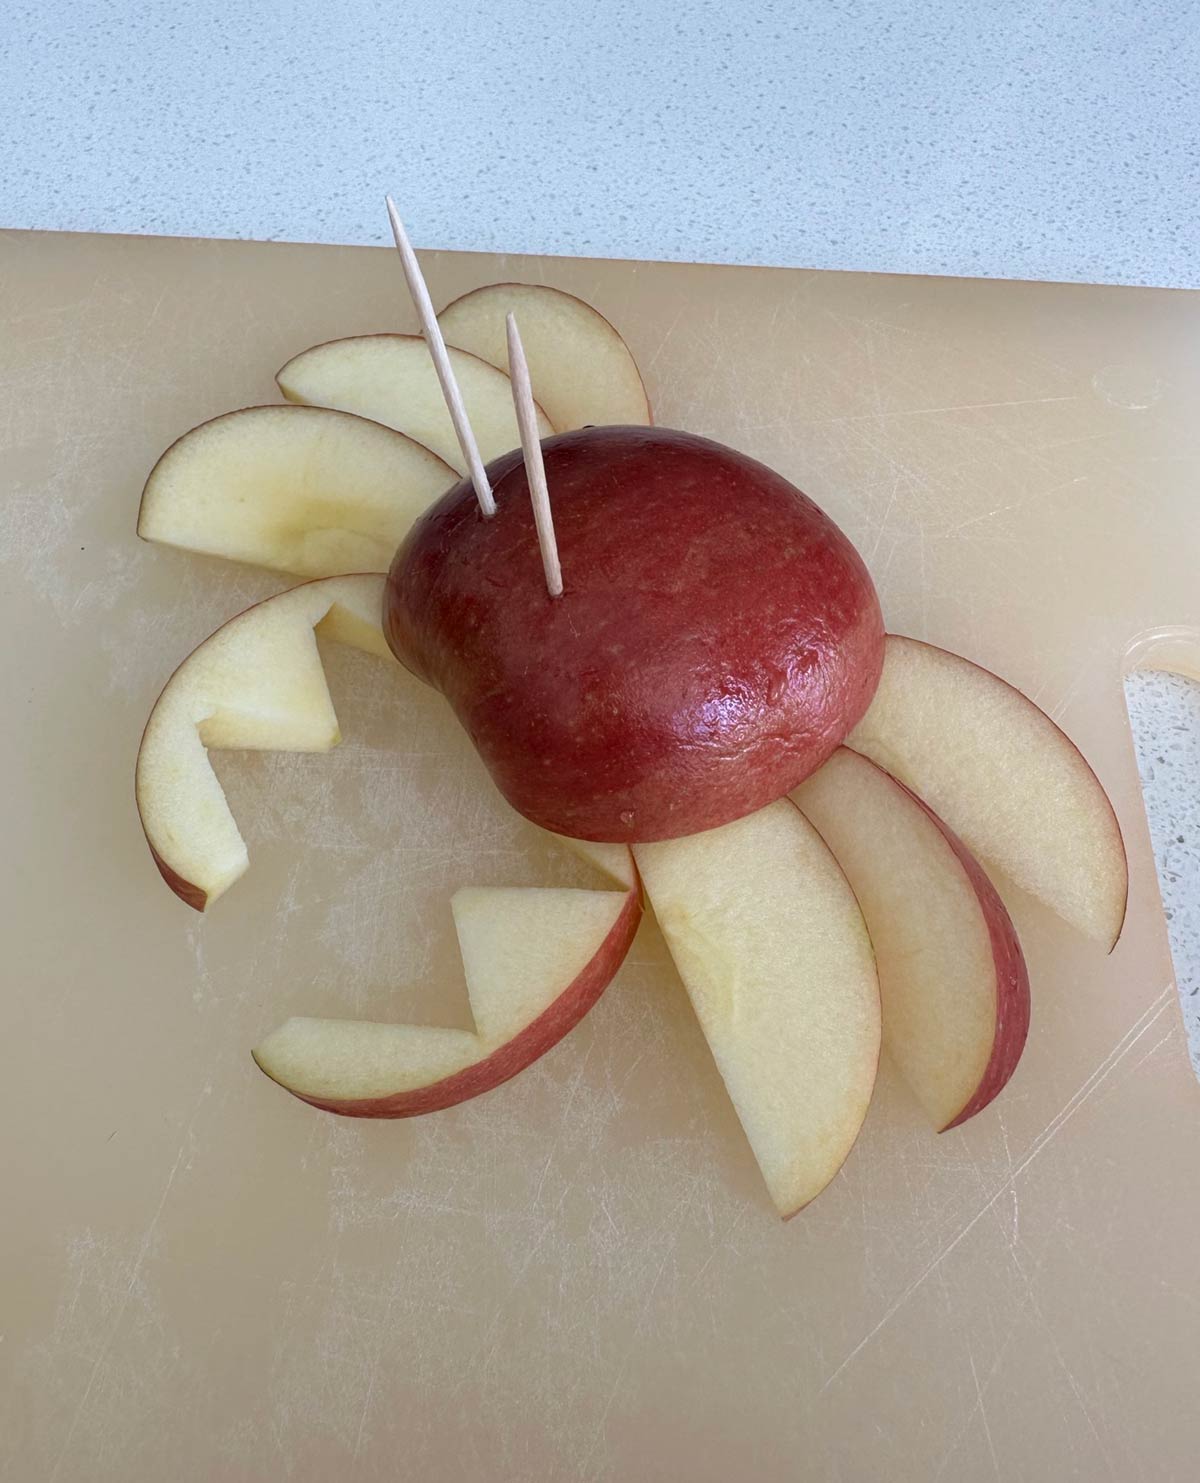 My niece made a crab-apple